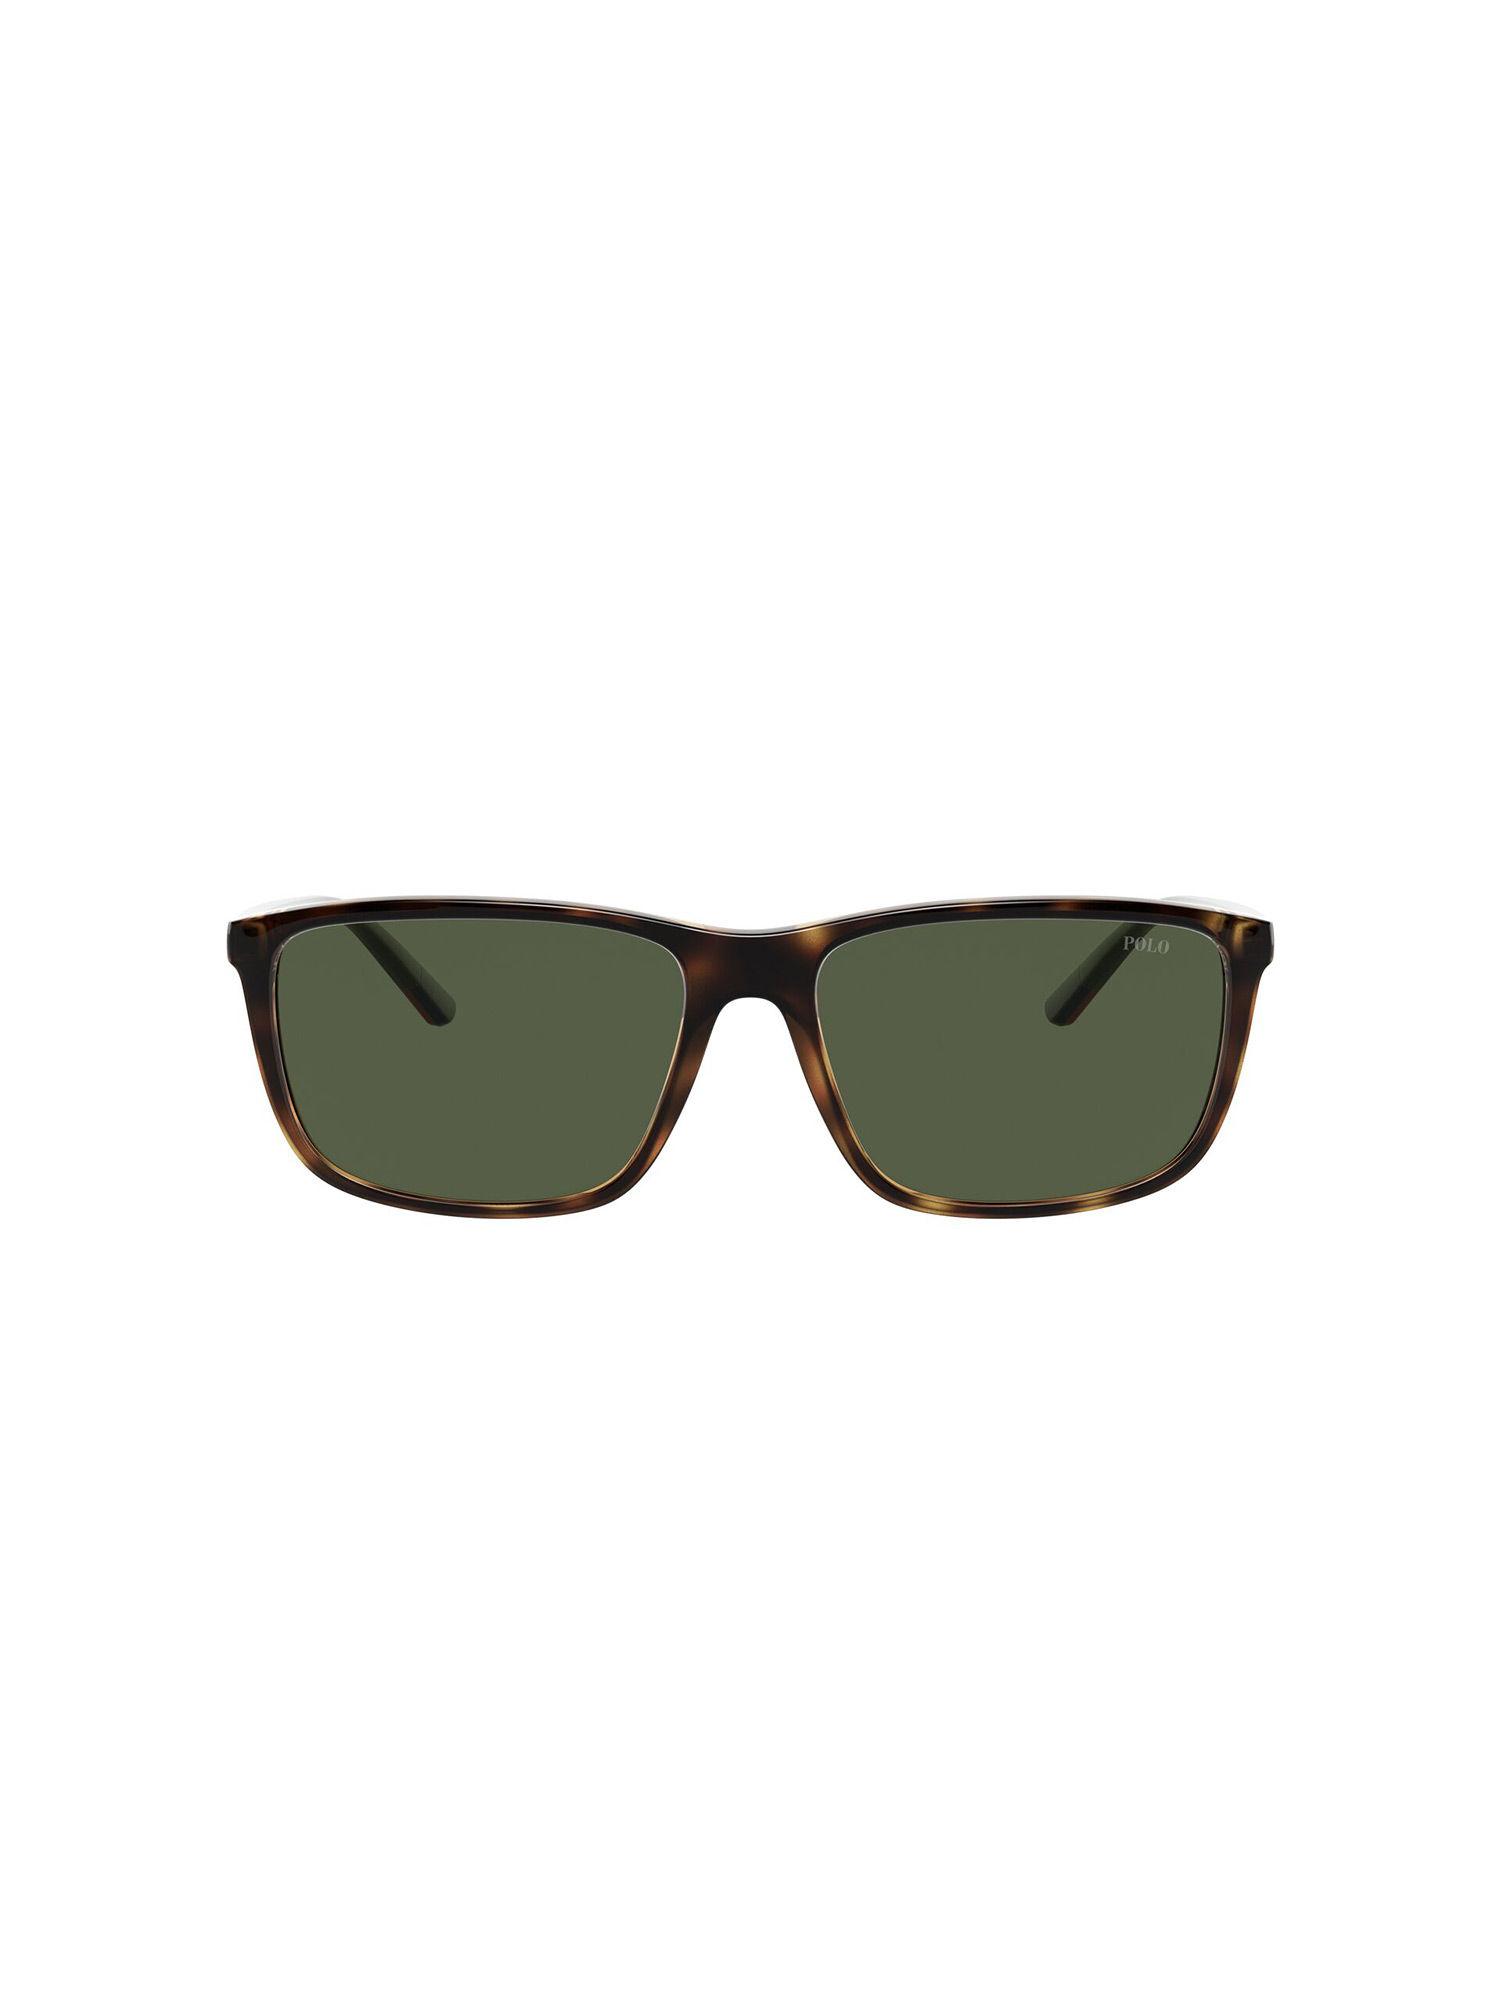 0ph4171 polo bi-color temple tip green lens rectangle male sunglasses